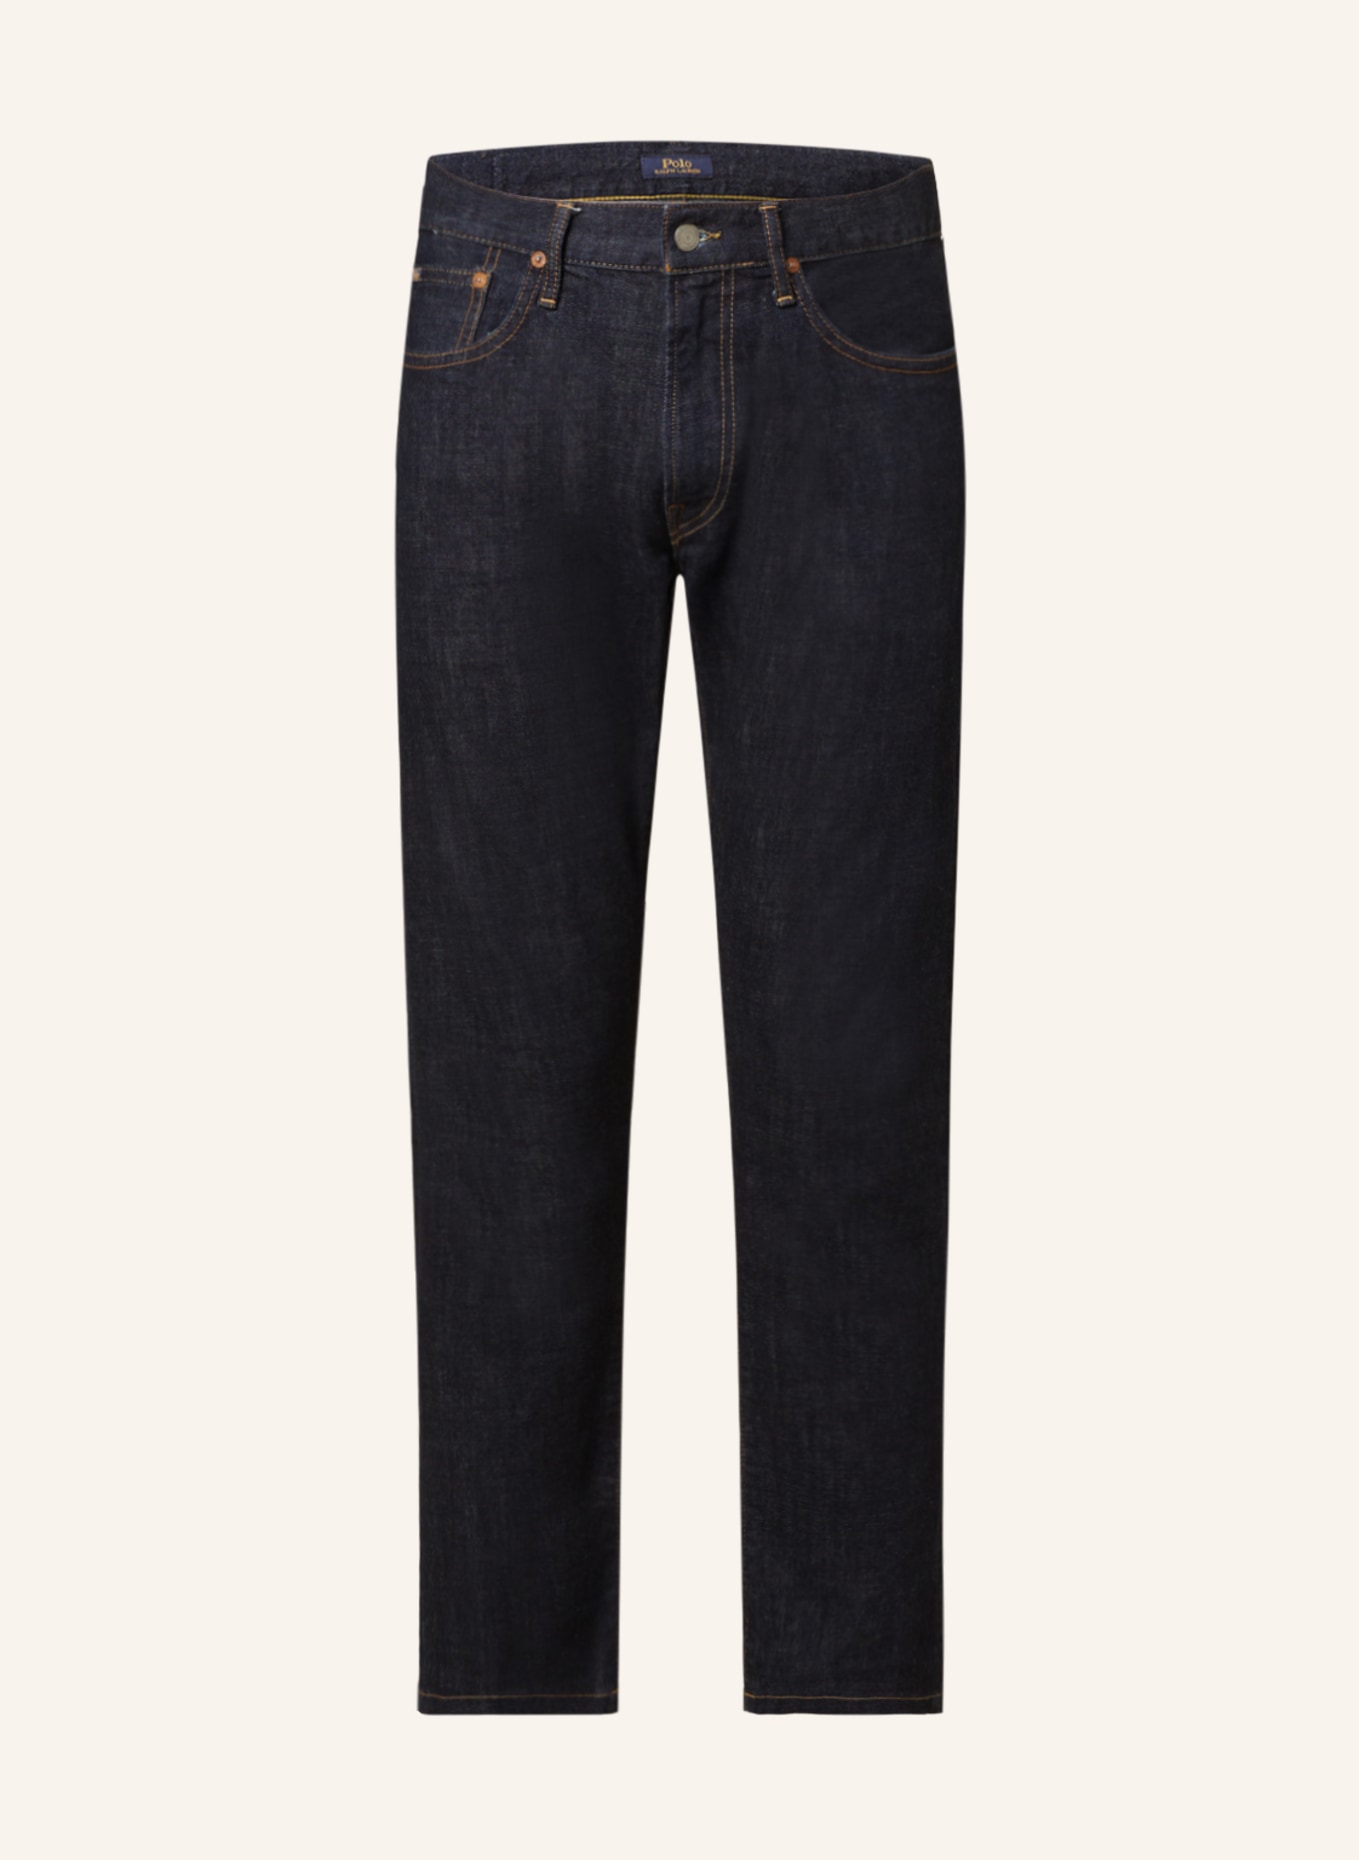 POLO RALPH LAUREN Jeans SULLIVAN Slim Fit, Farbe: MURPHY STRETCH BLUE (Bild 1)